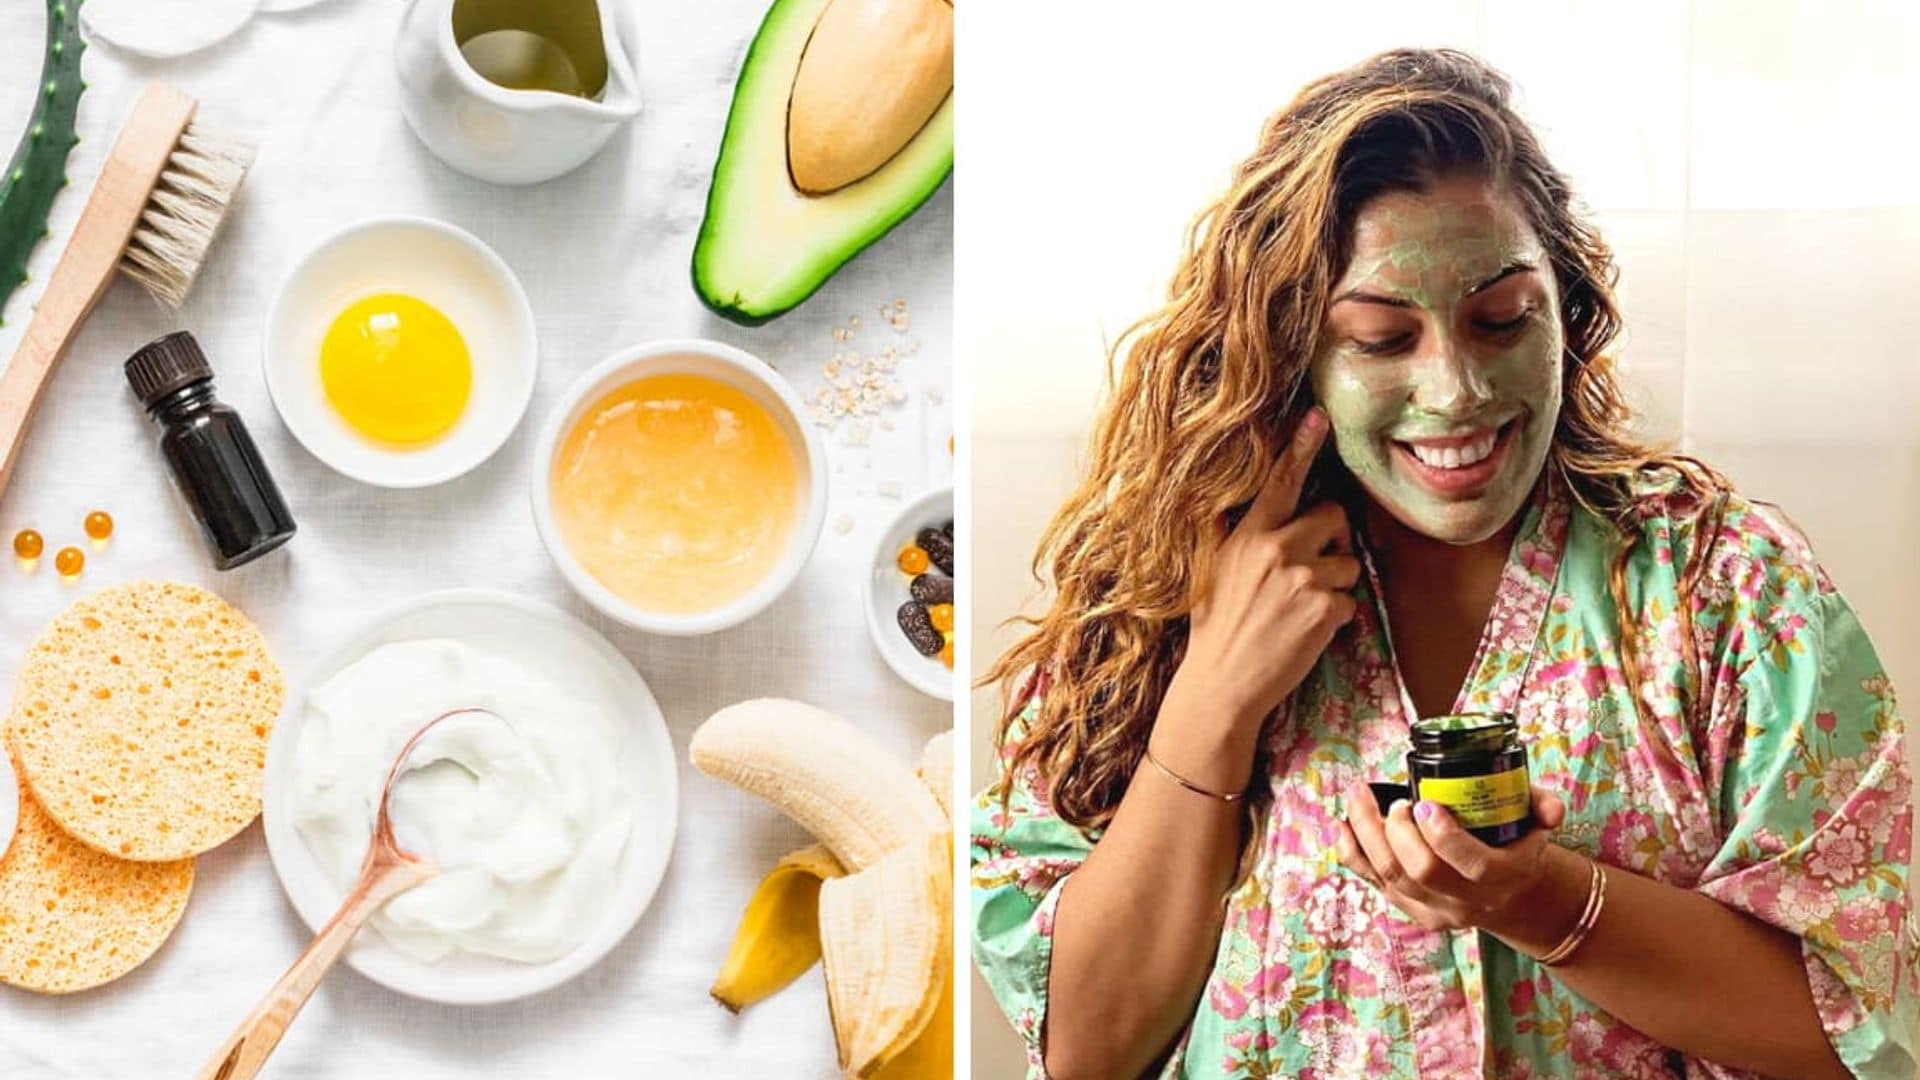 DIY hair and skin mask recipes Latina beauty gurus swear by